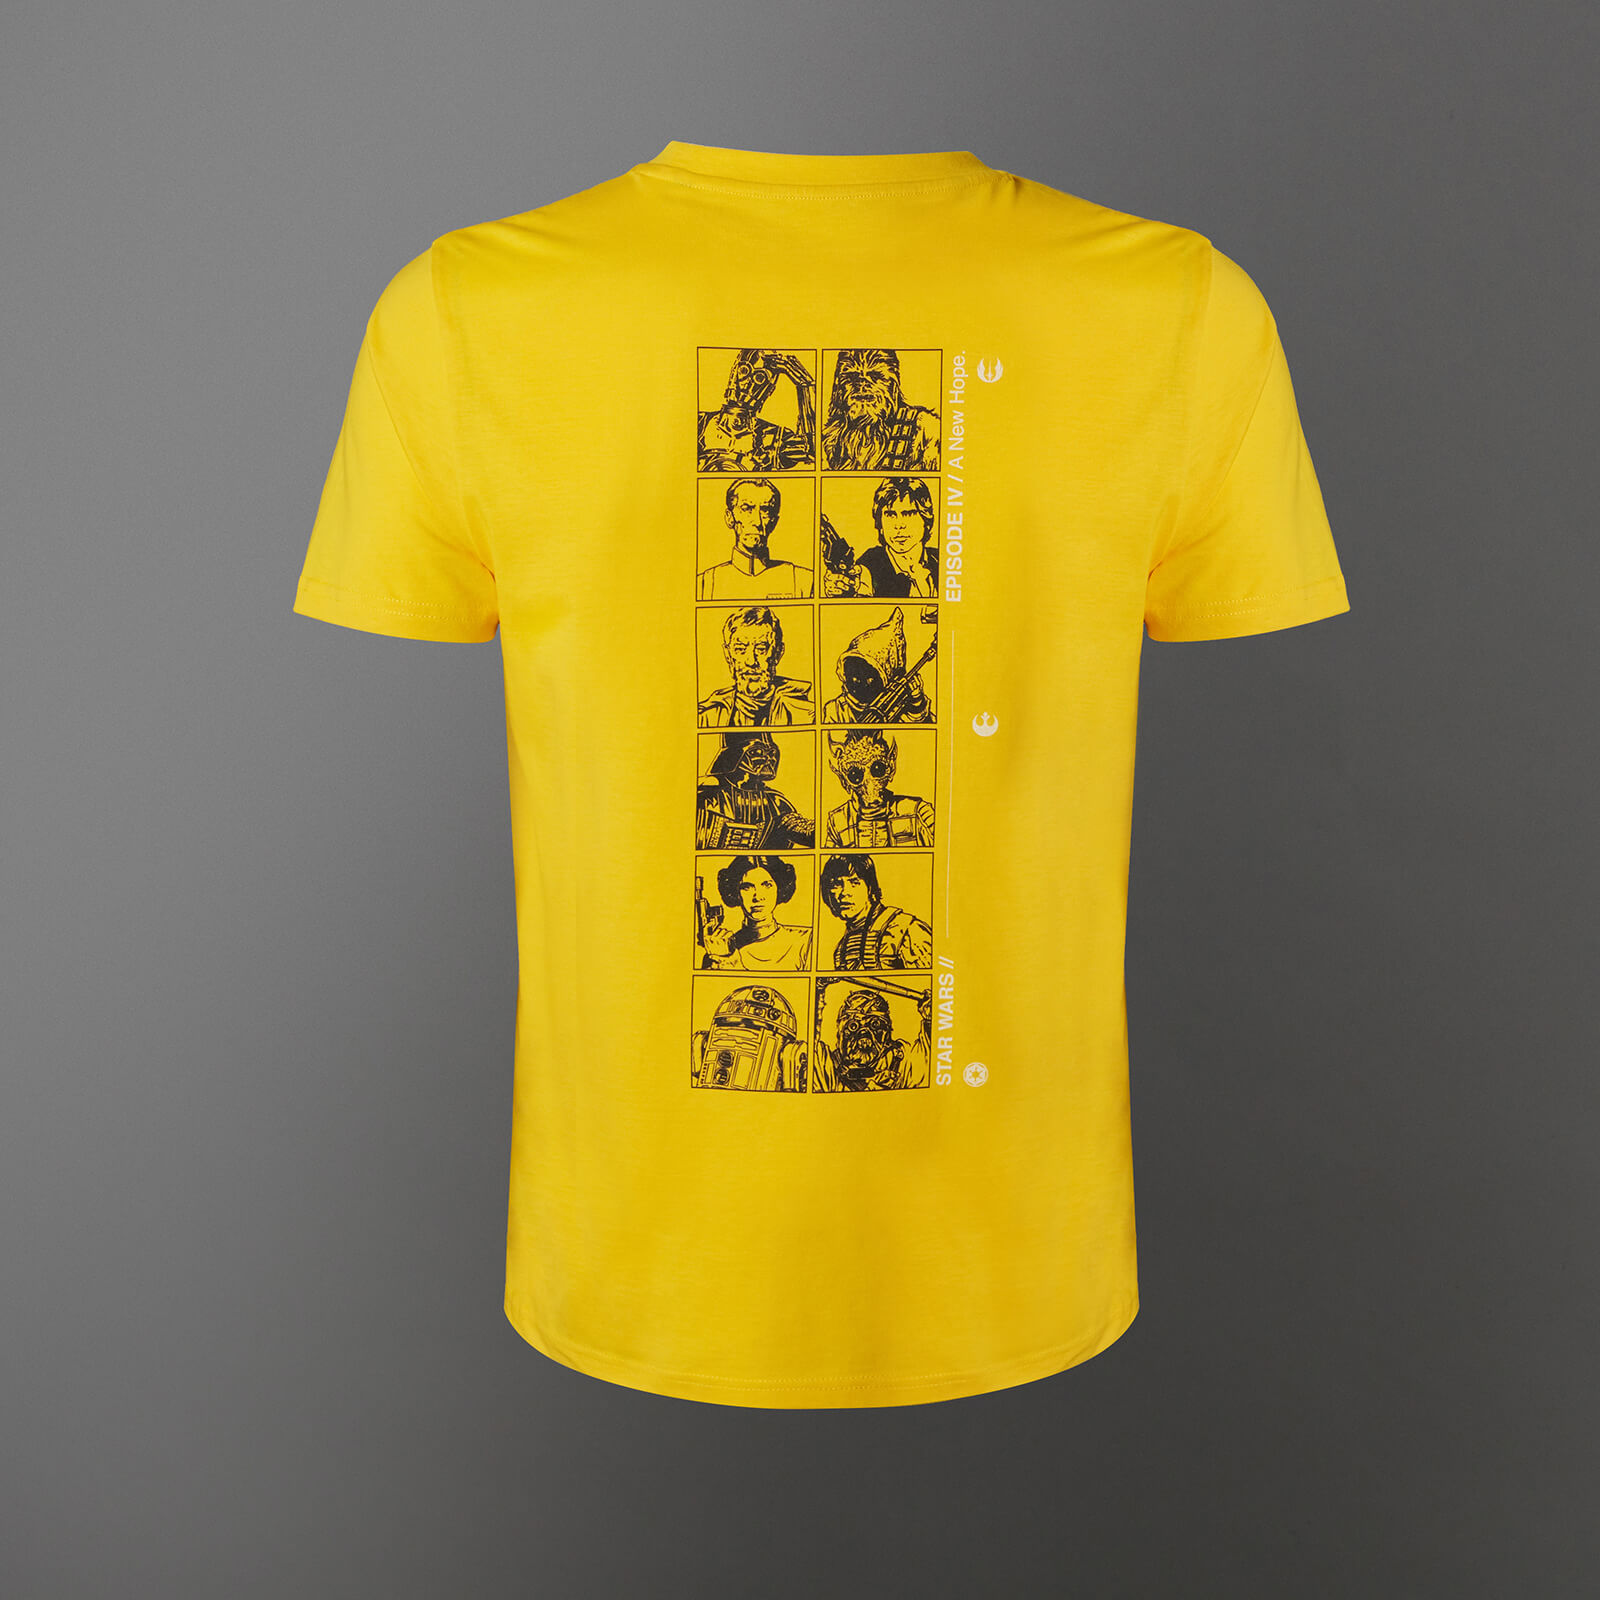 Star Wars A New Hope Lineup Unisex T-Shirt - Yellow - XS - Yellow